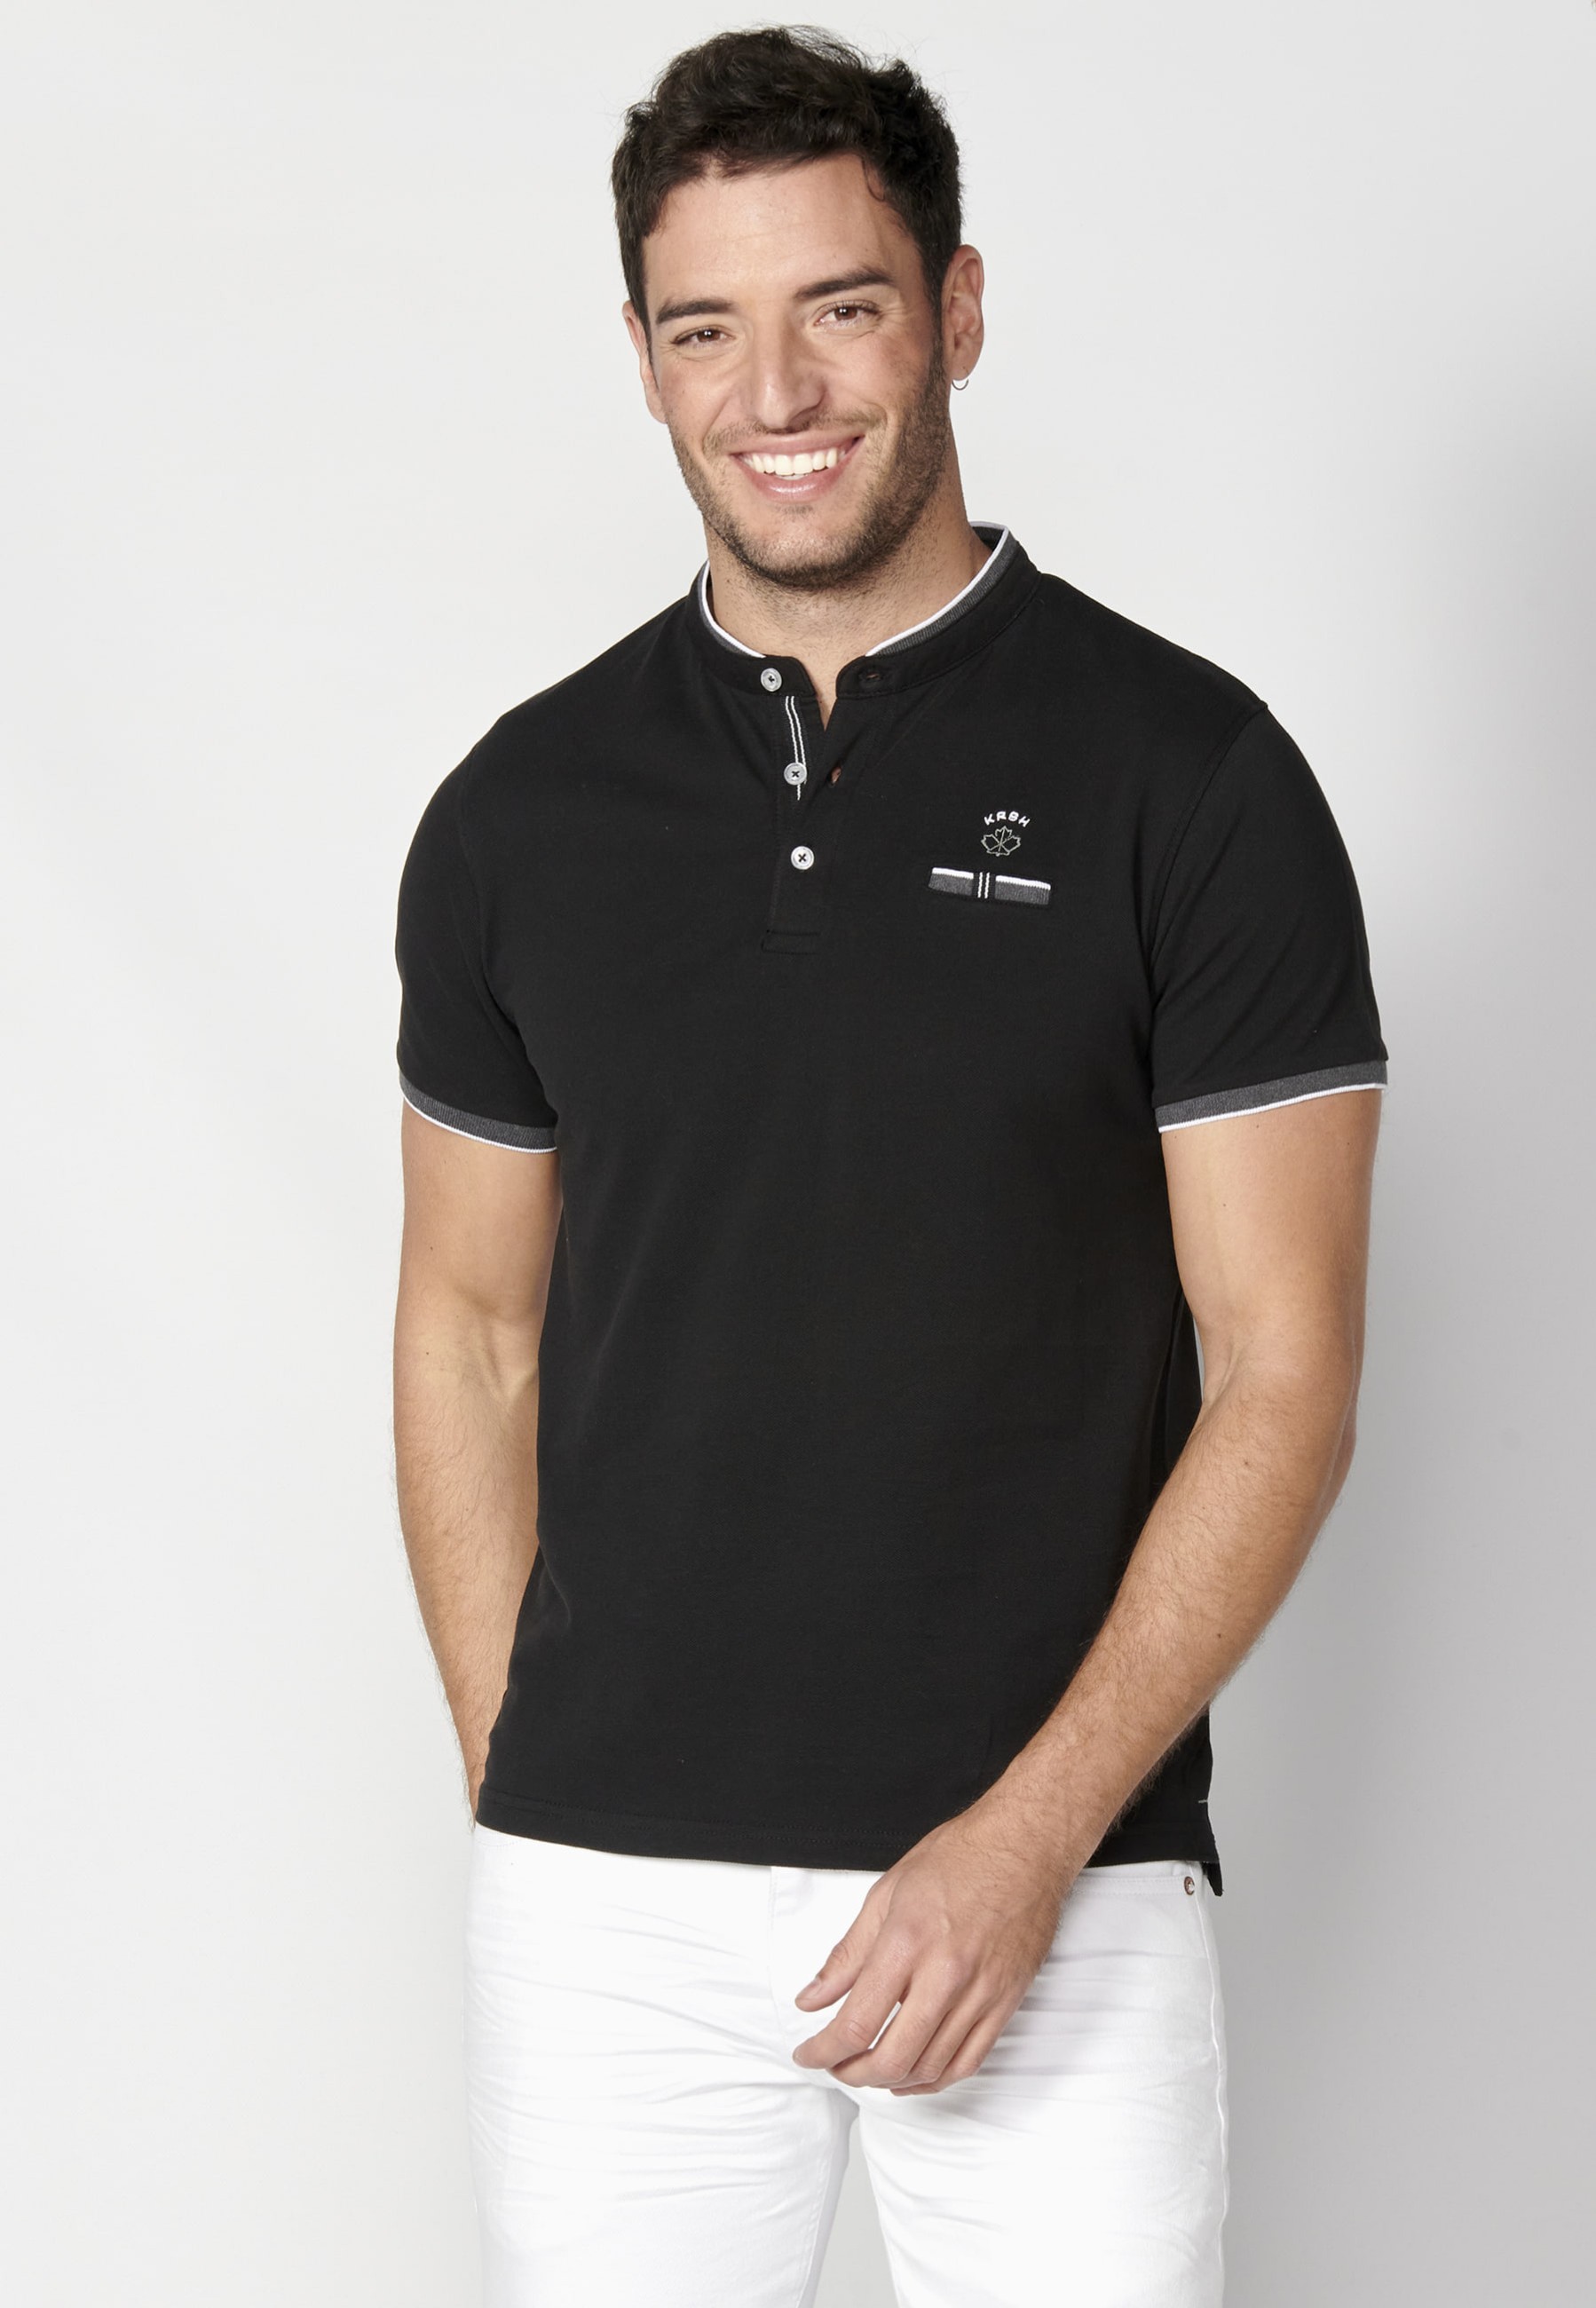 Black Cotton Short Sleeve Polo Shirt for Men